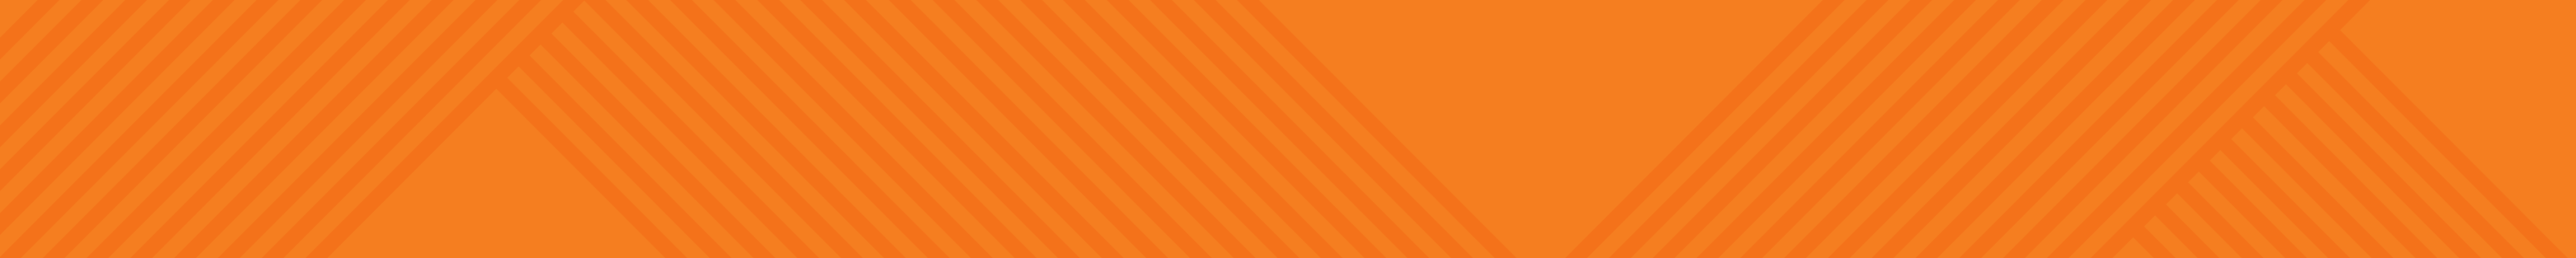 Cartel naranja con rayas diagonales de color naranja